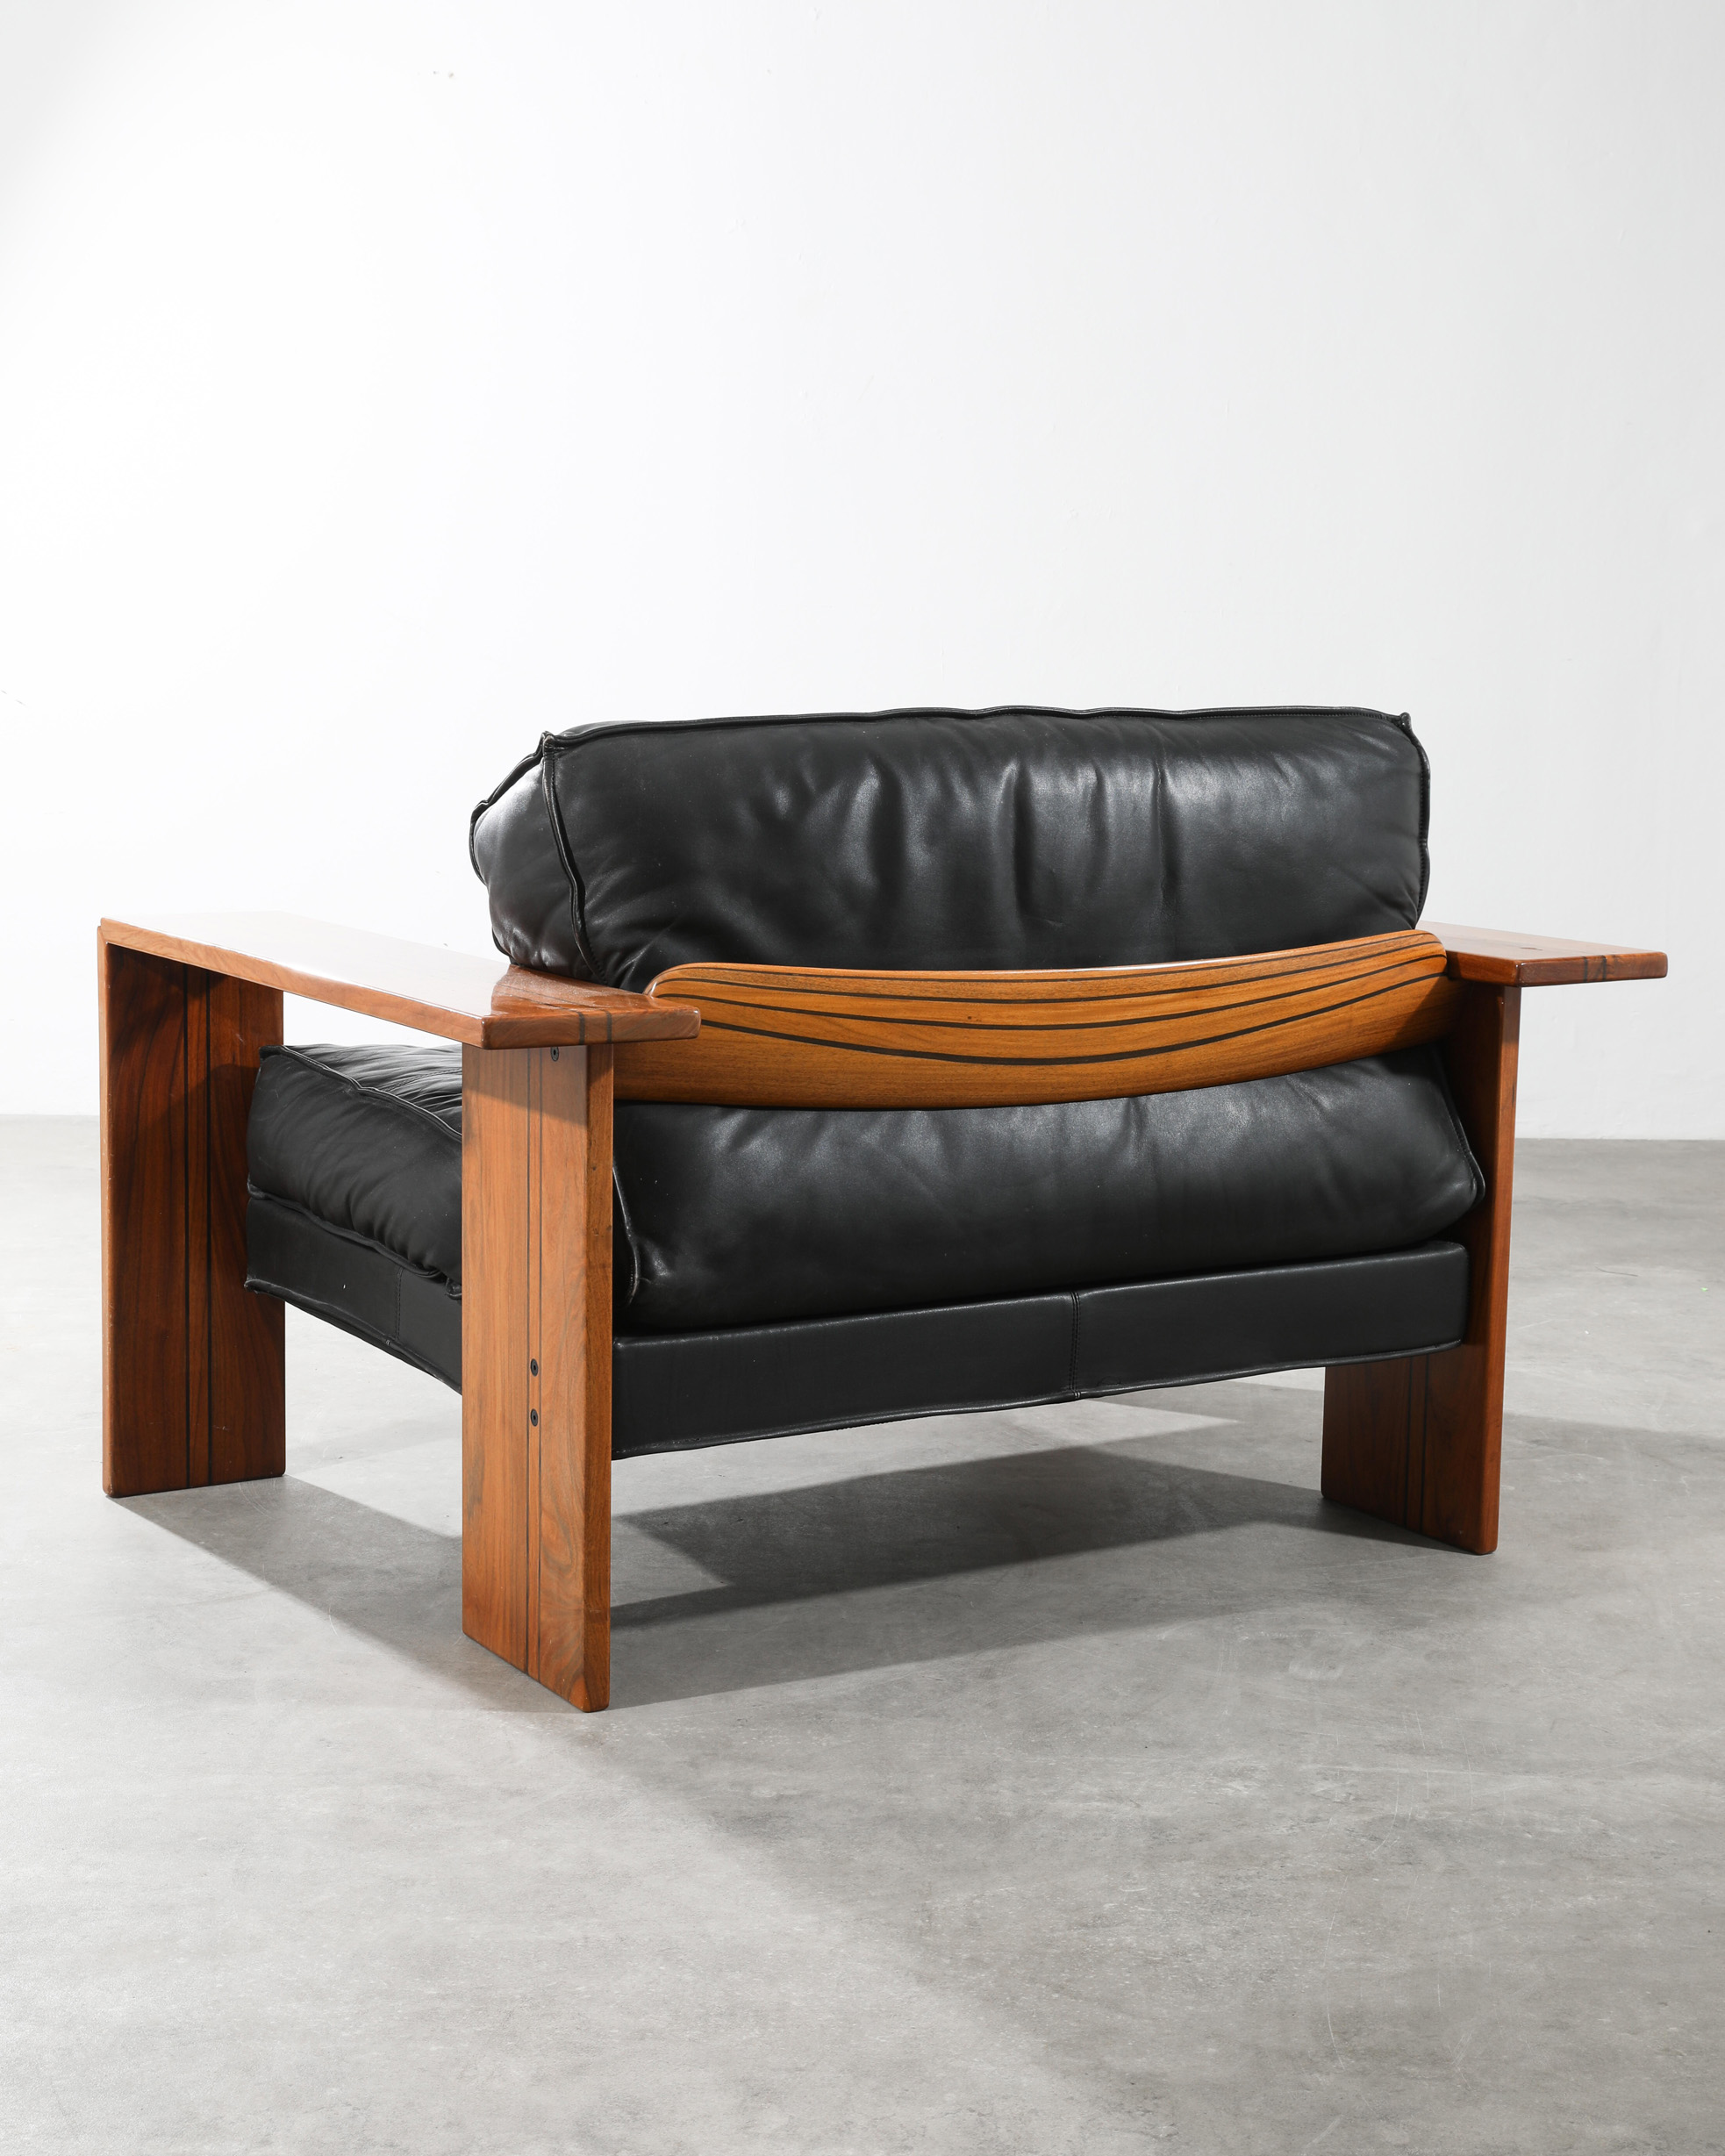 Afra & Tobia Scarpa, Maxalto, Lounge Chair Model Artona - Image 5 of 6